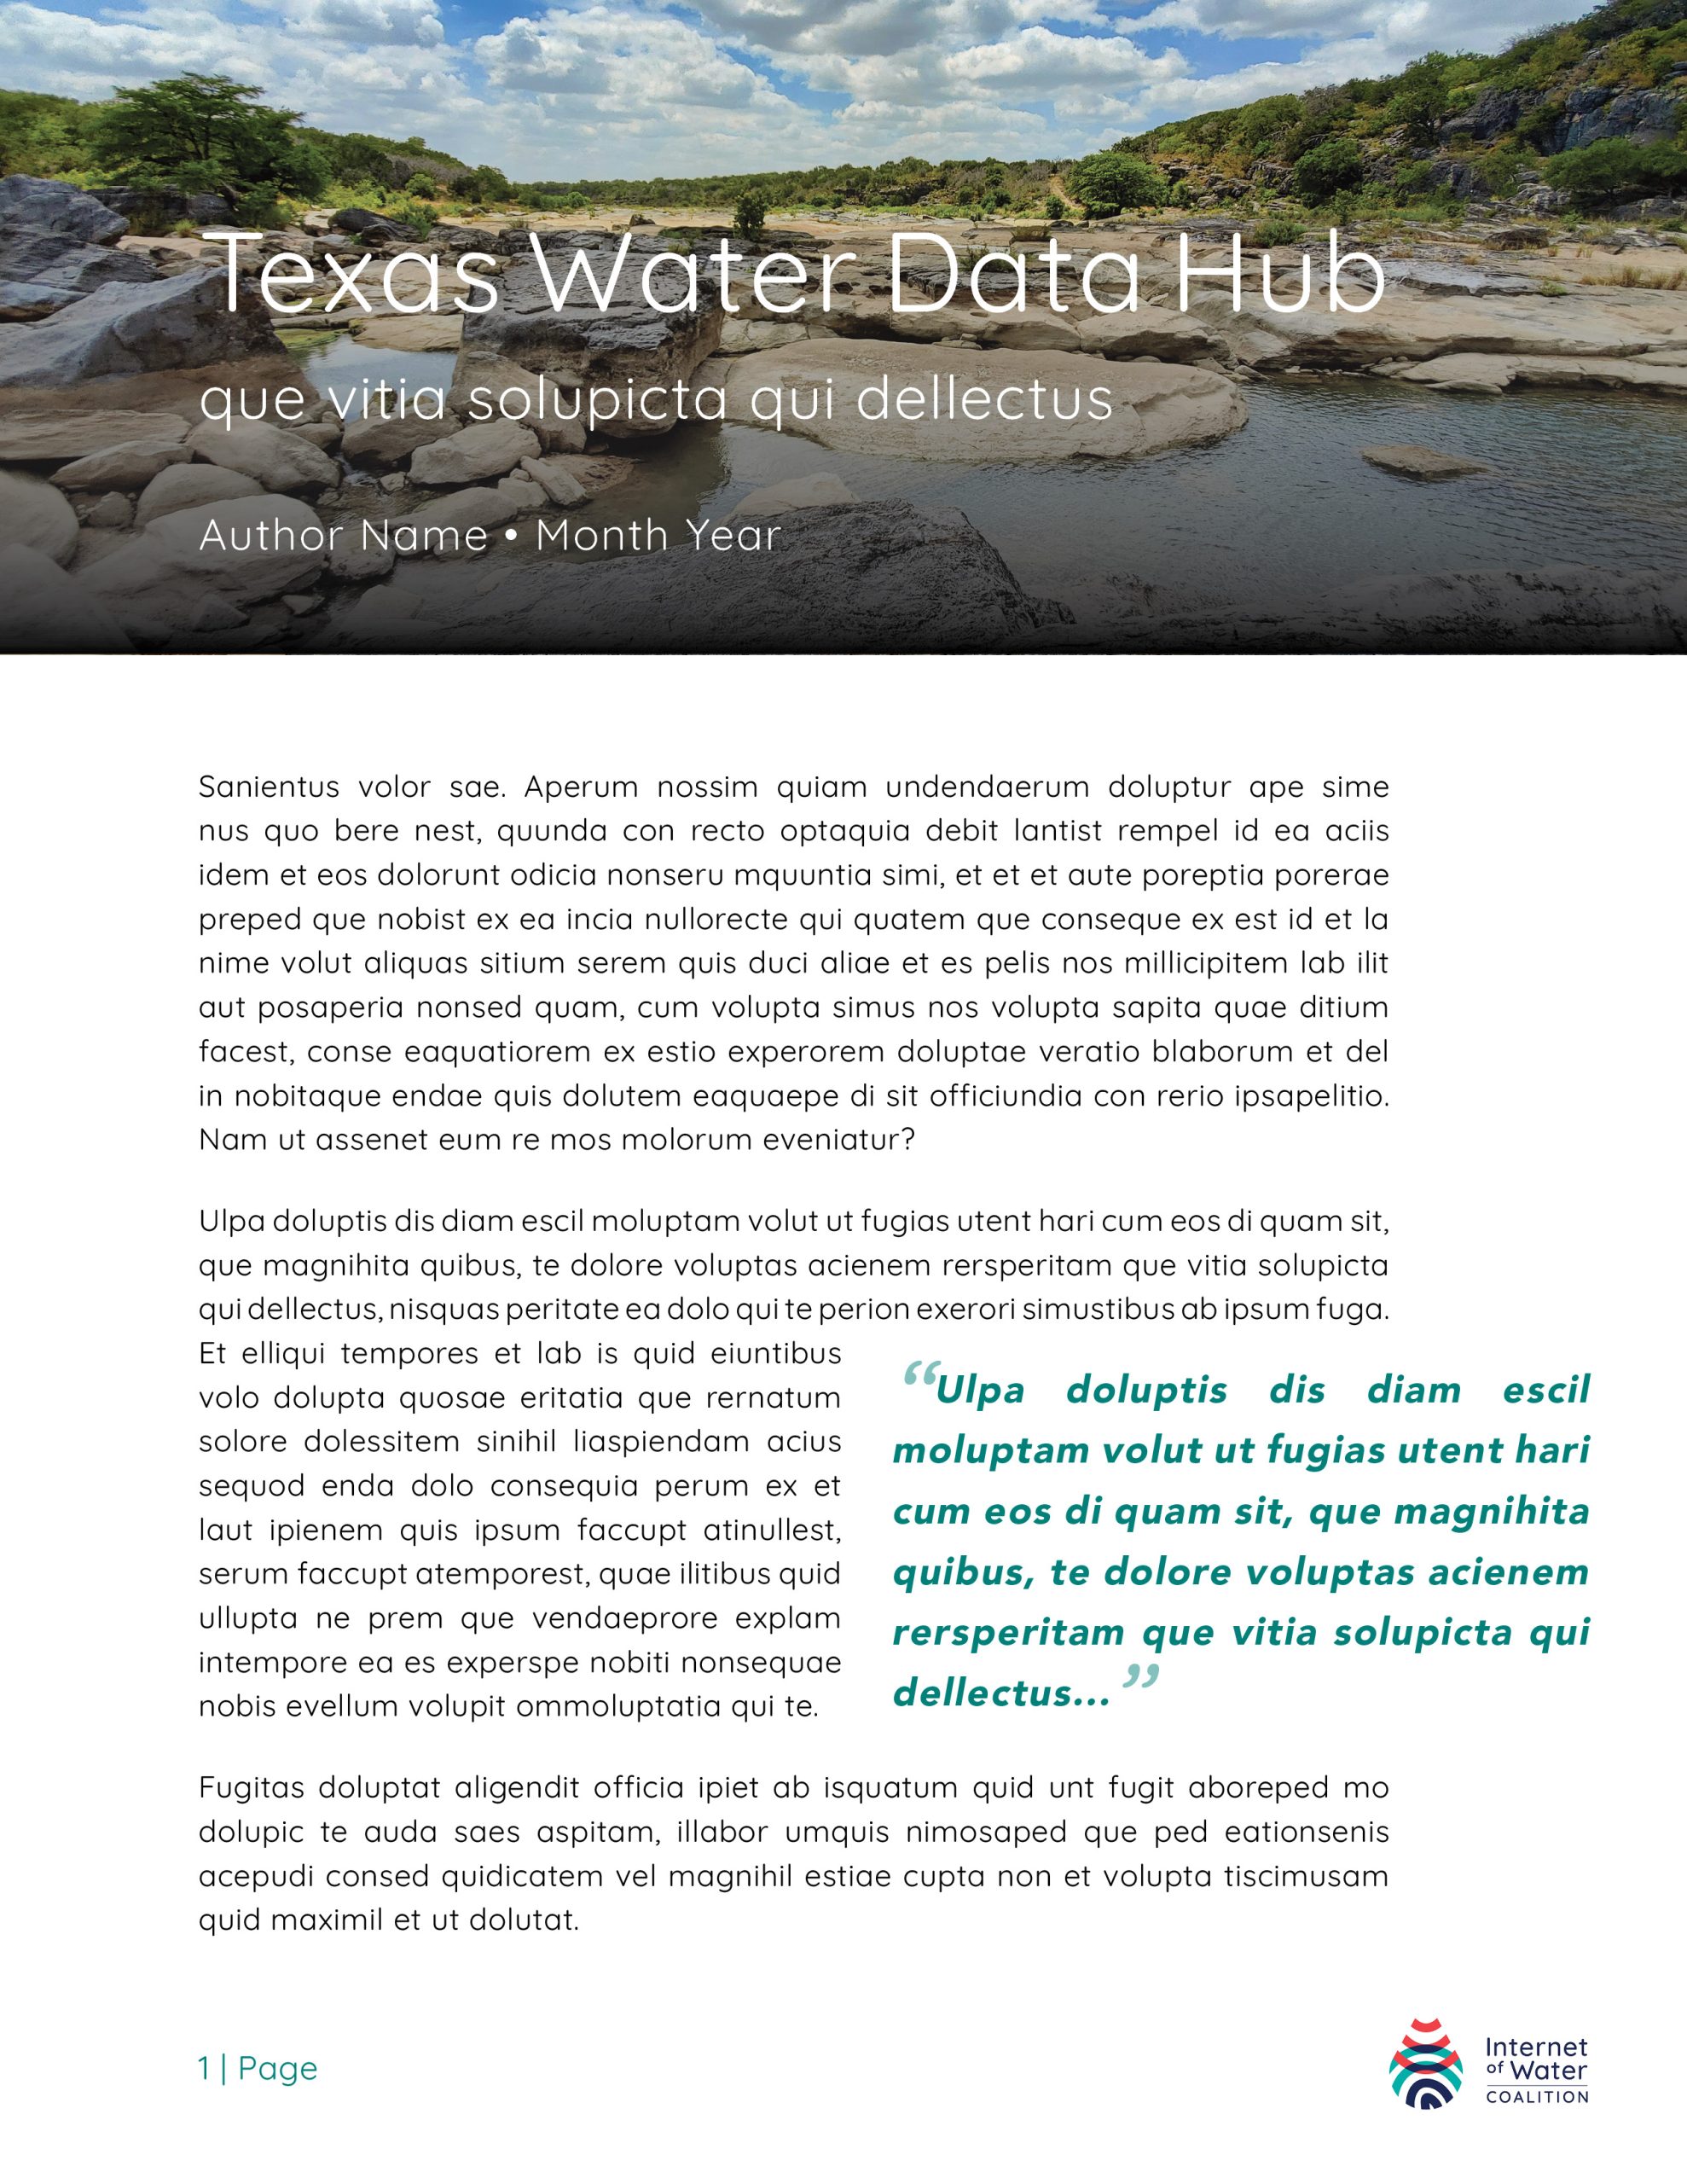 Texas Water Data Hub Blog